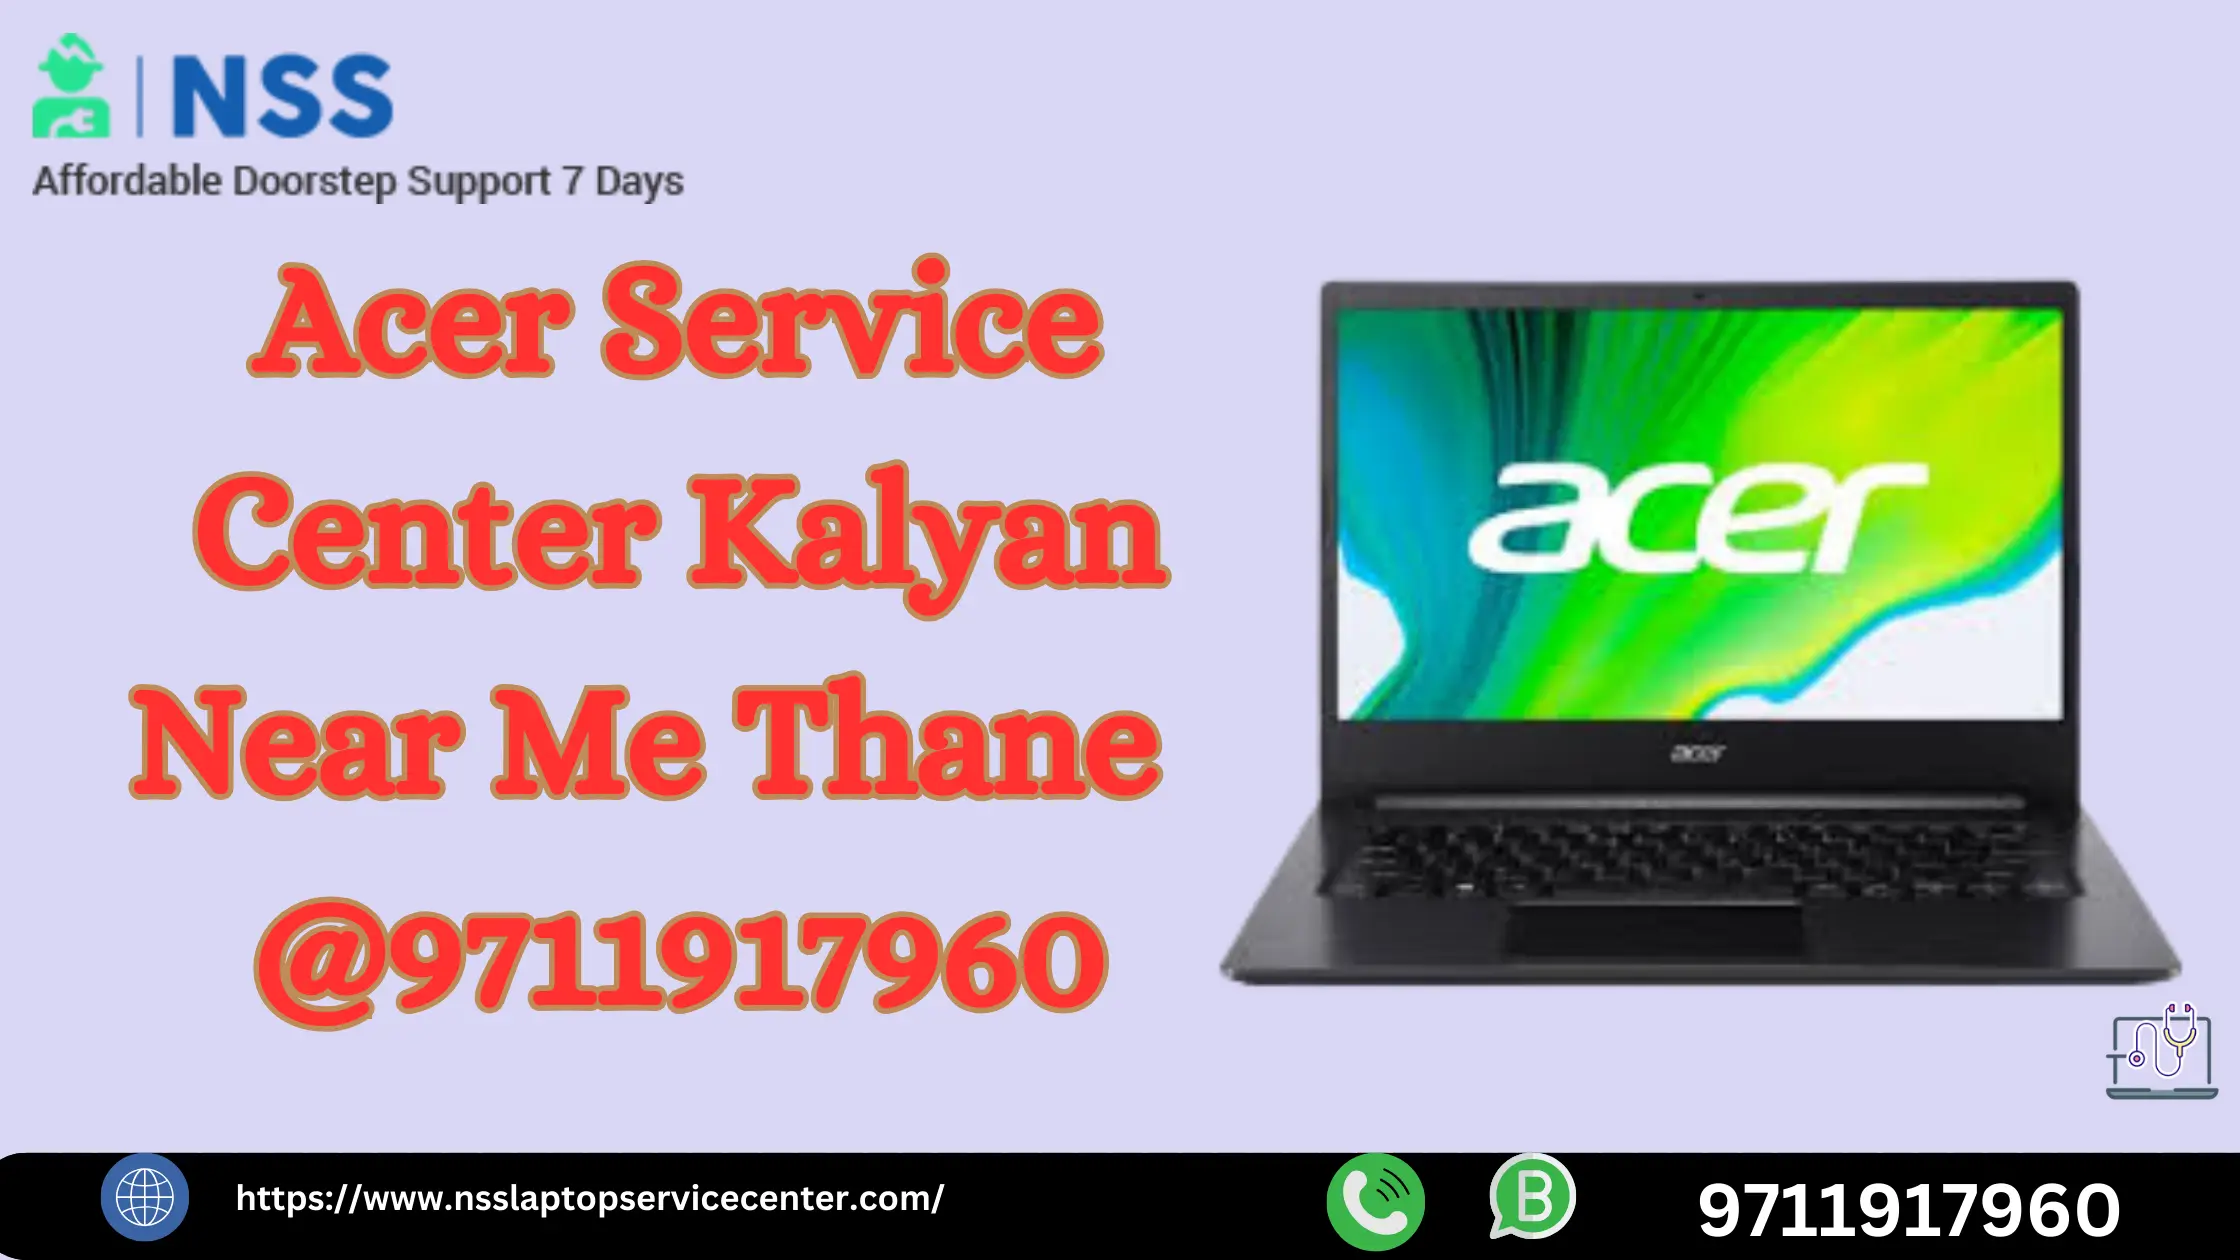 Seeking Acer Service Center Kalyan Near Me Thane